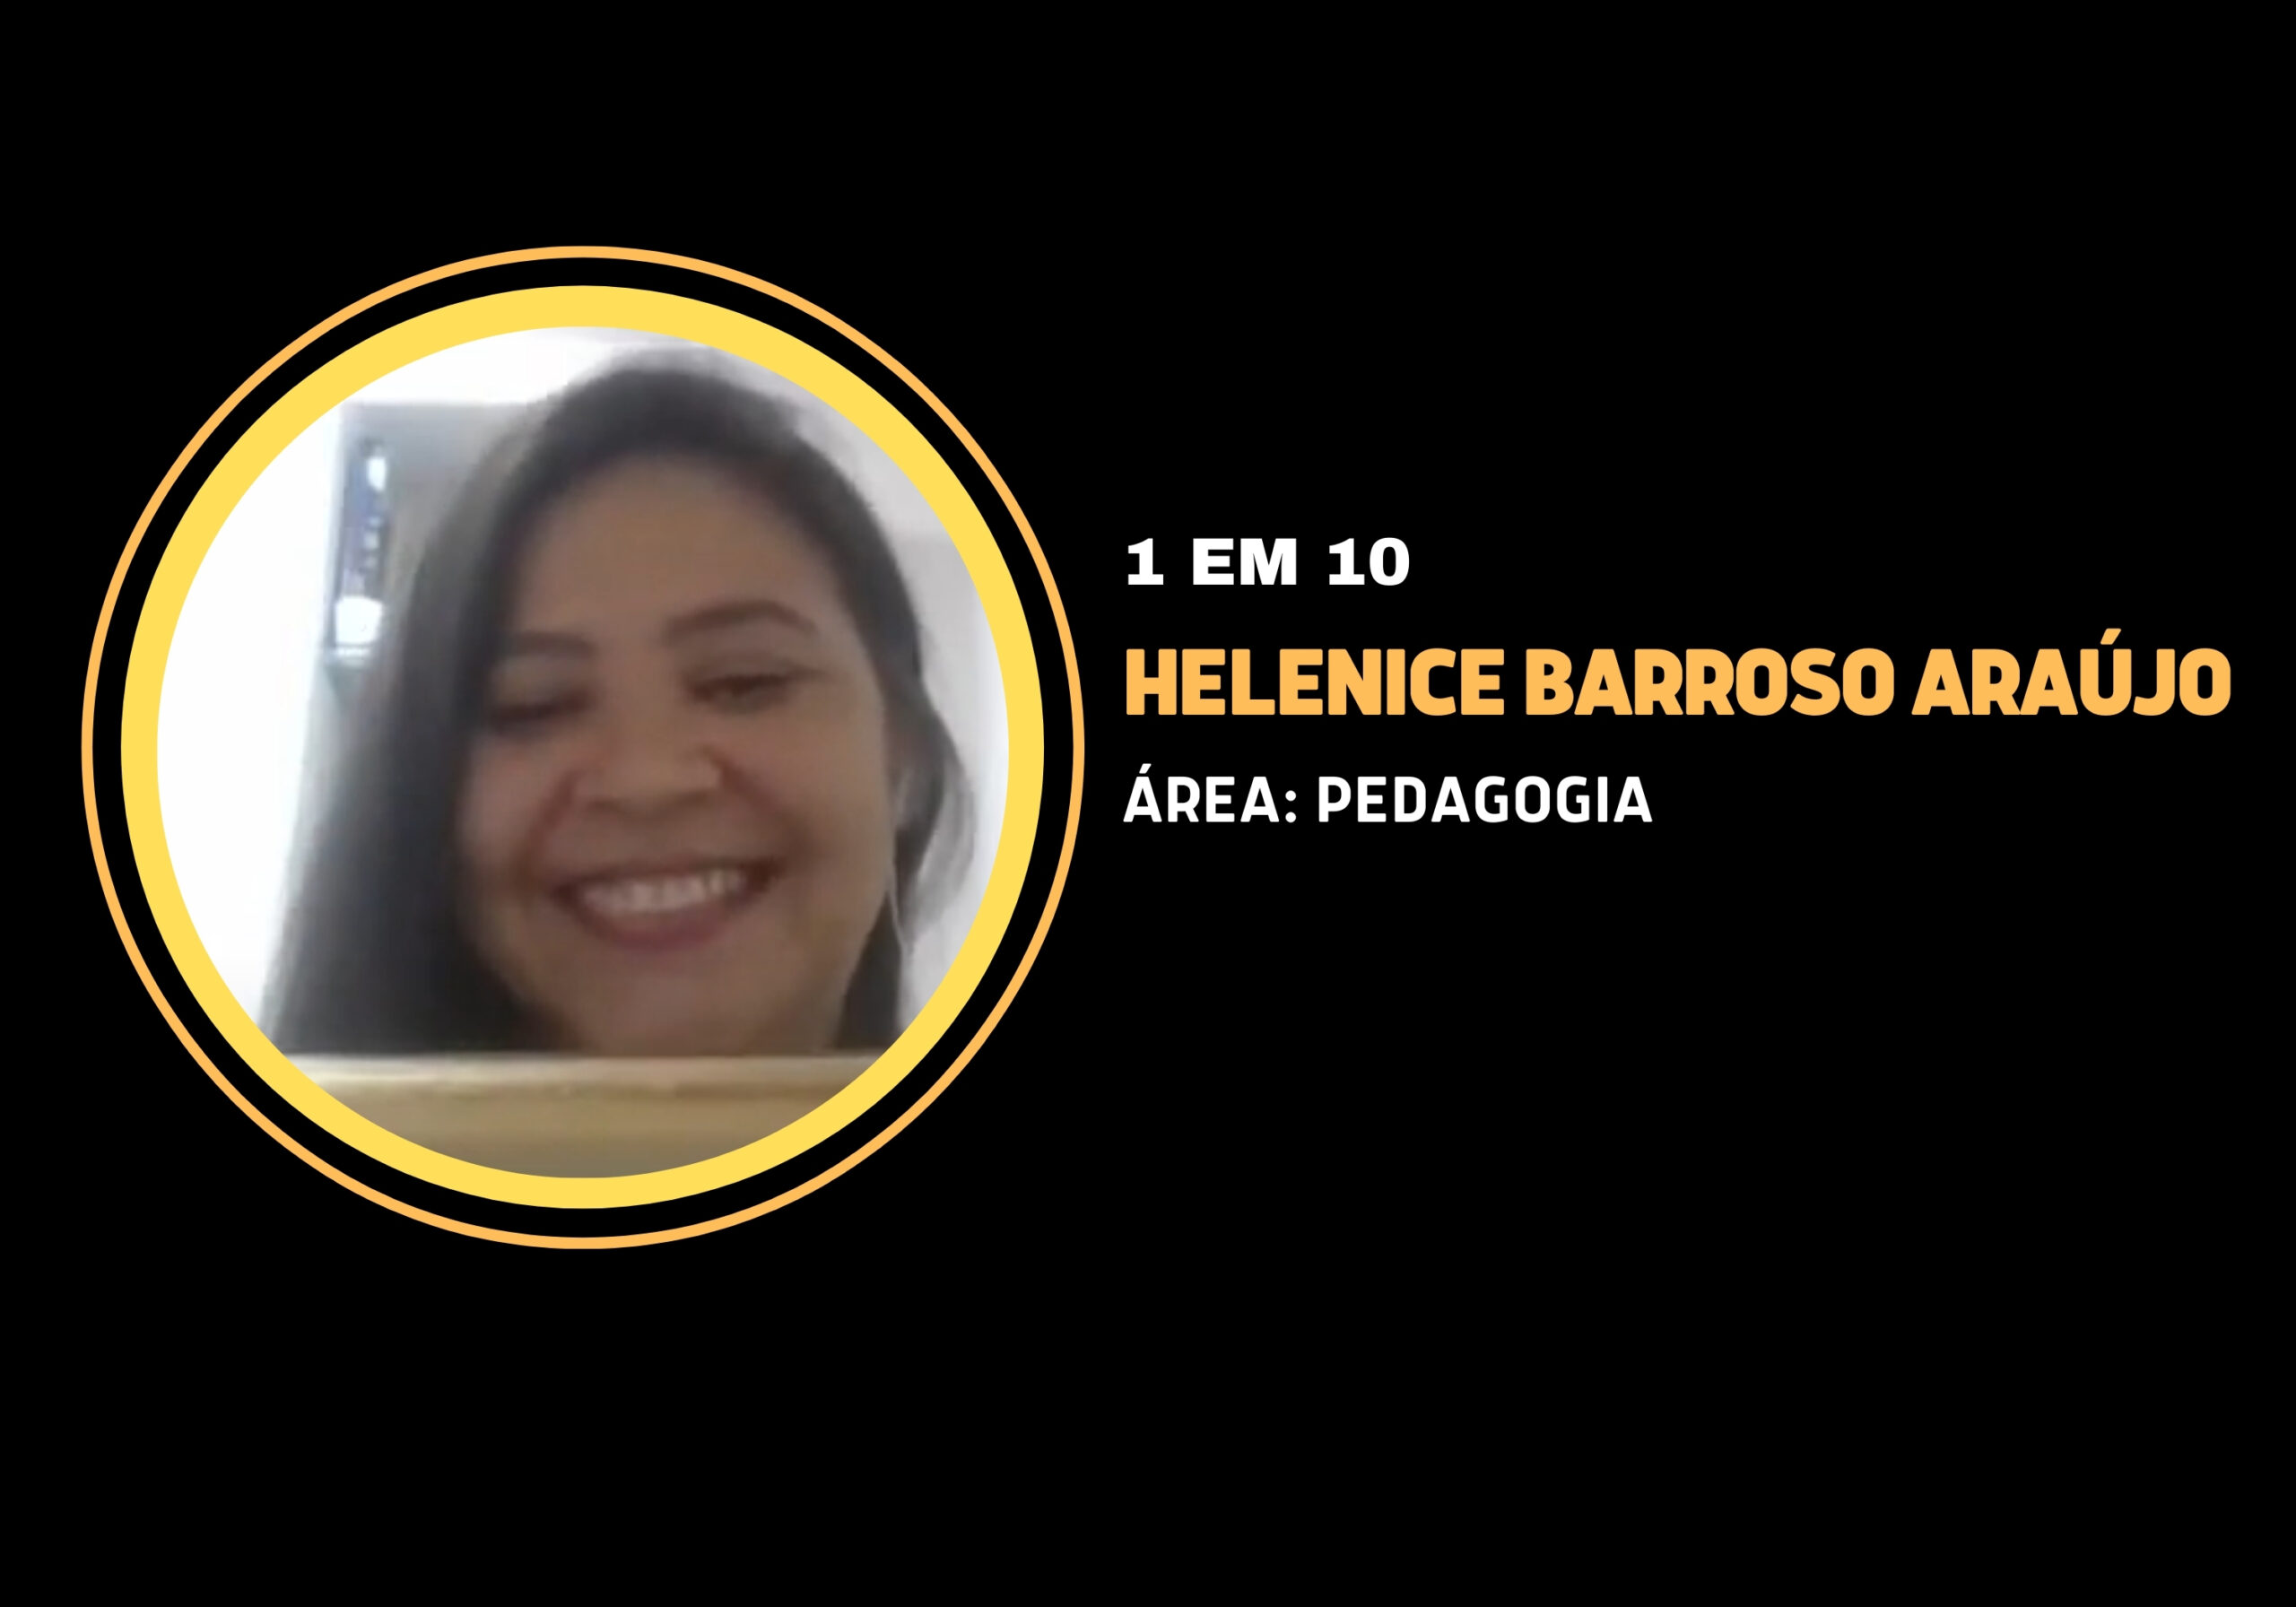 Helenice Barroso Araújo | 1 em 10